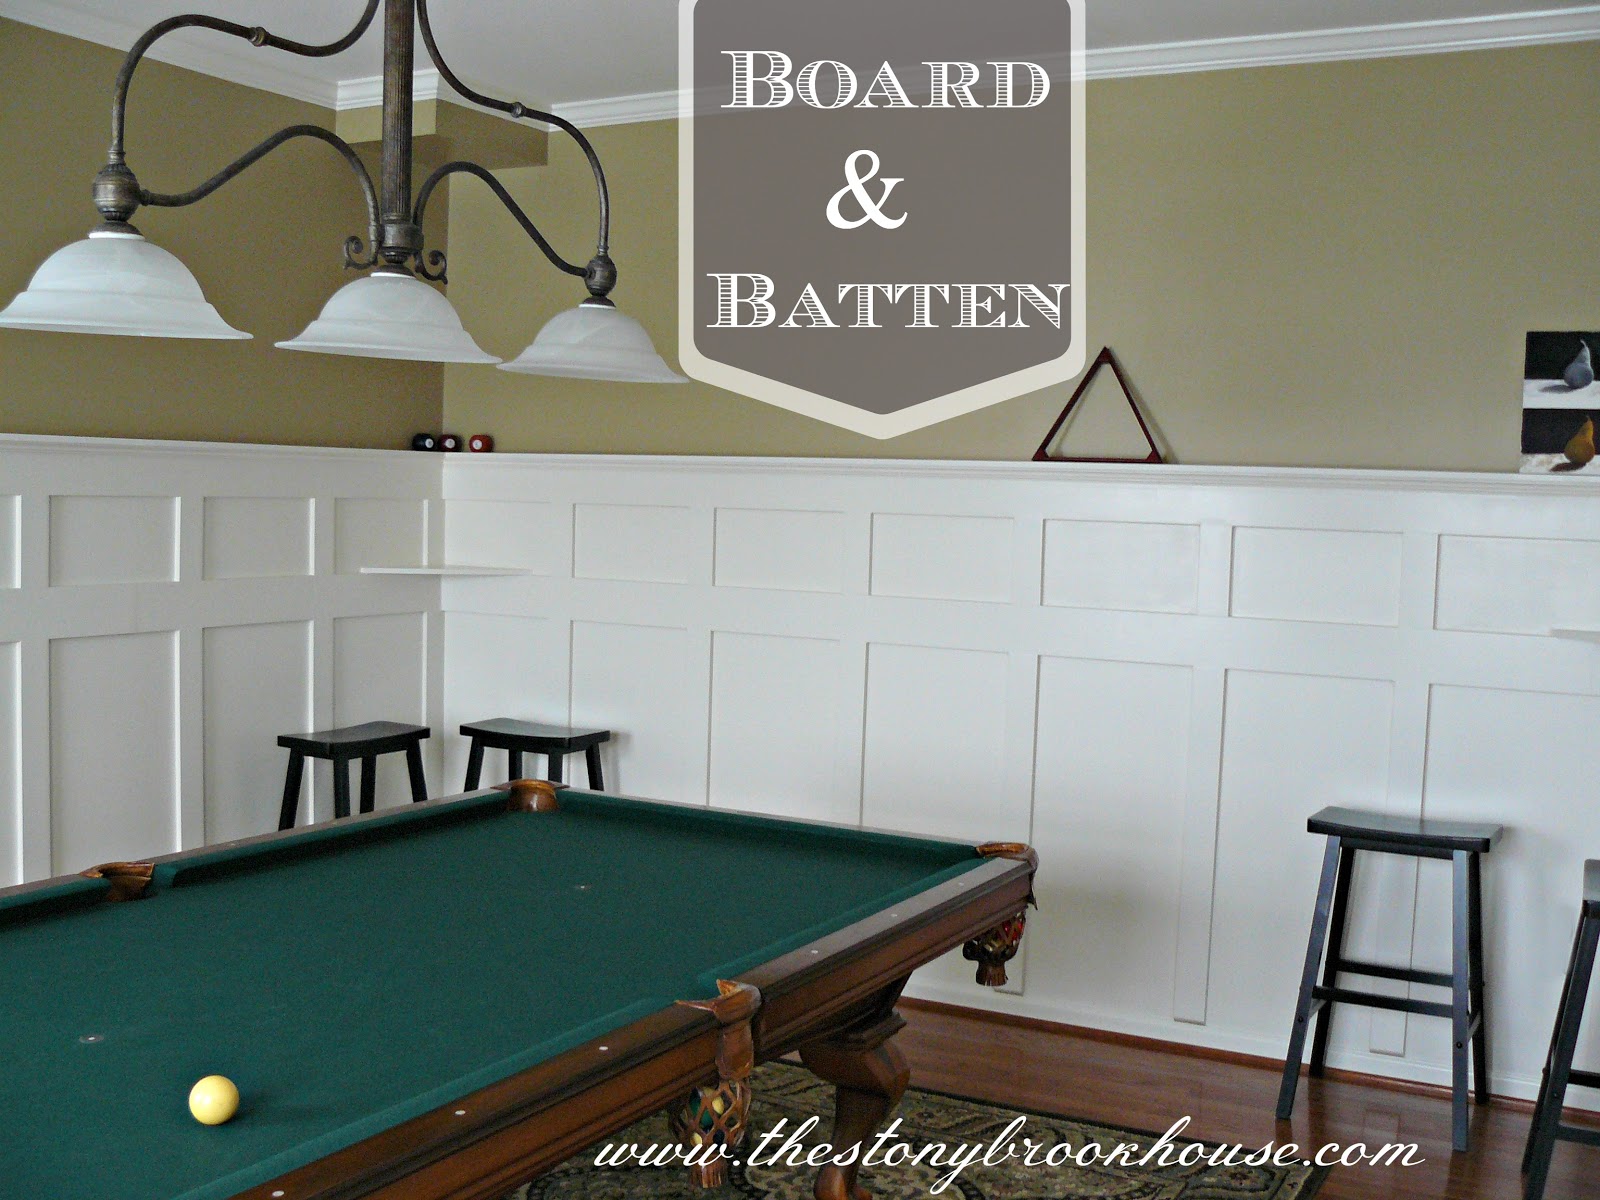 Billiard Room - How To Board & Batten